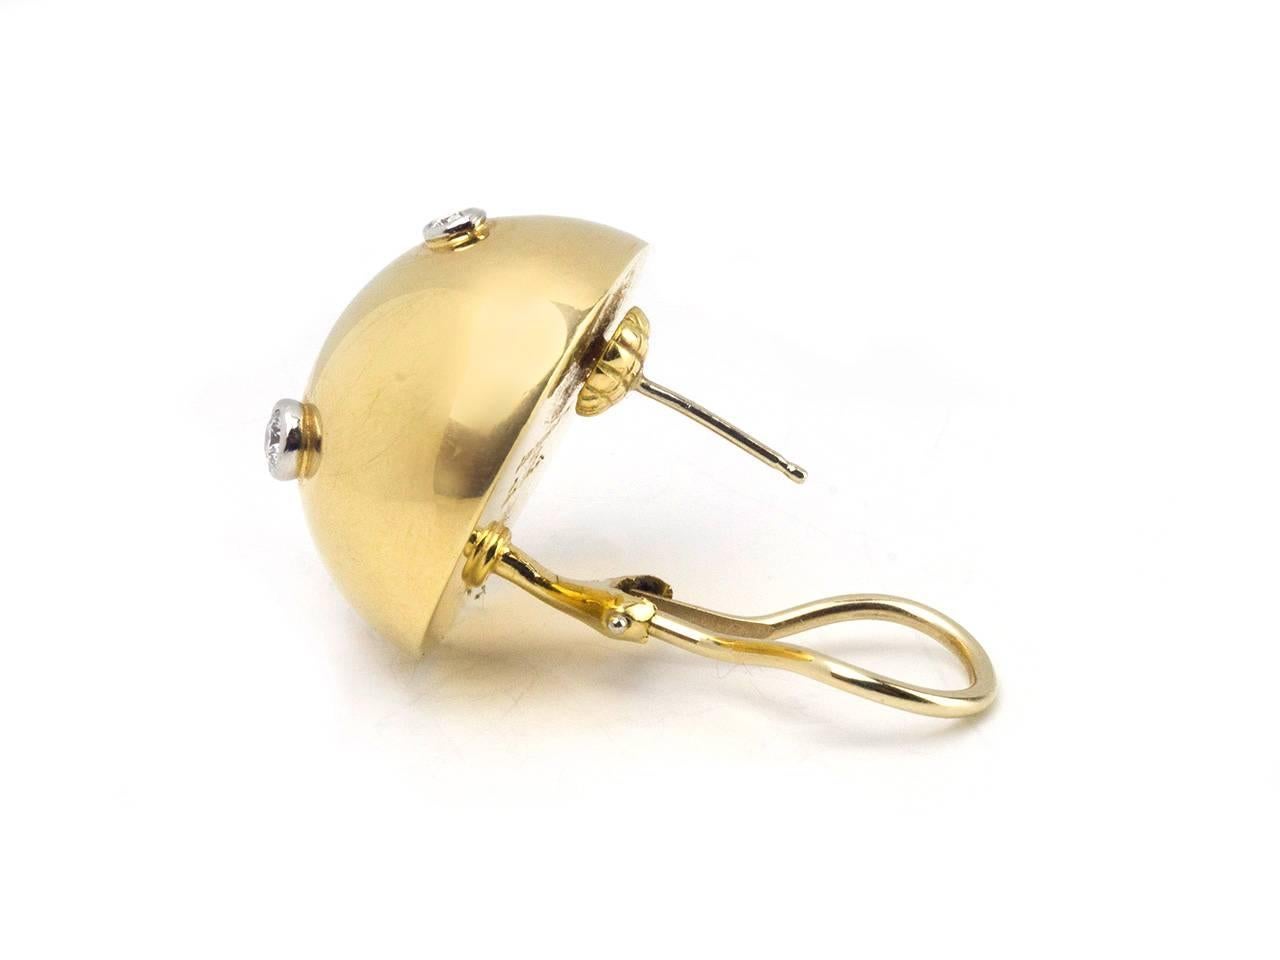 18k gold sphere Earclips studded with bezel-set diamonds. Signed Paloma Picasso Tiffany 18kt Plat.